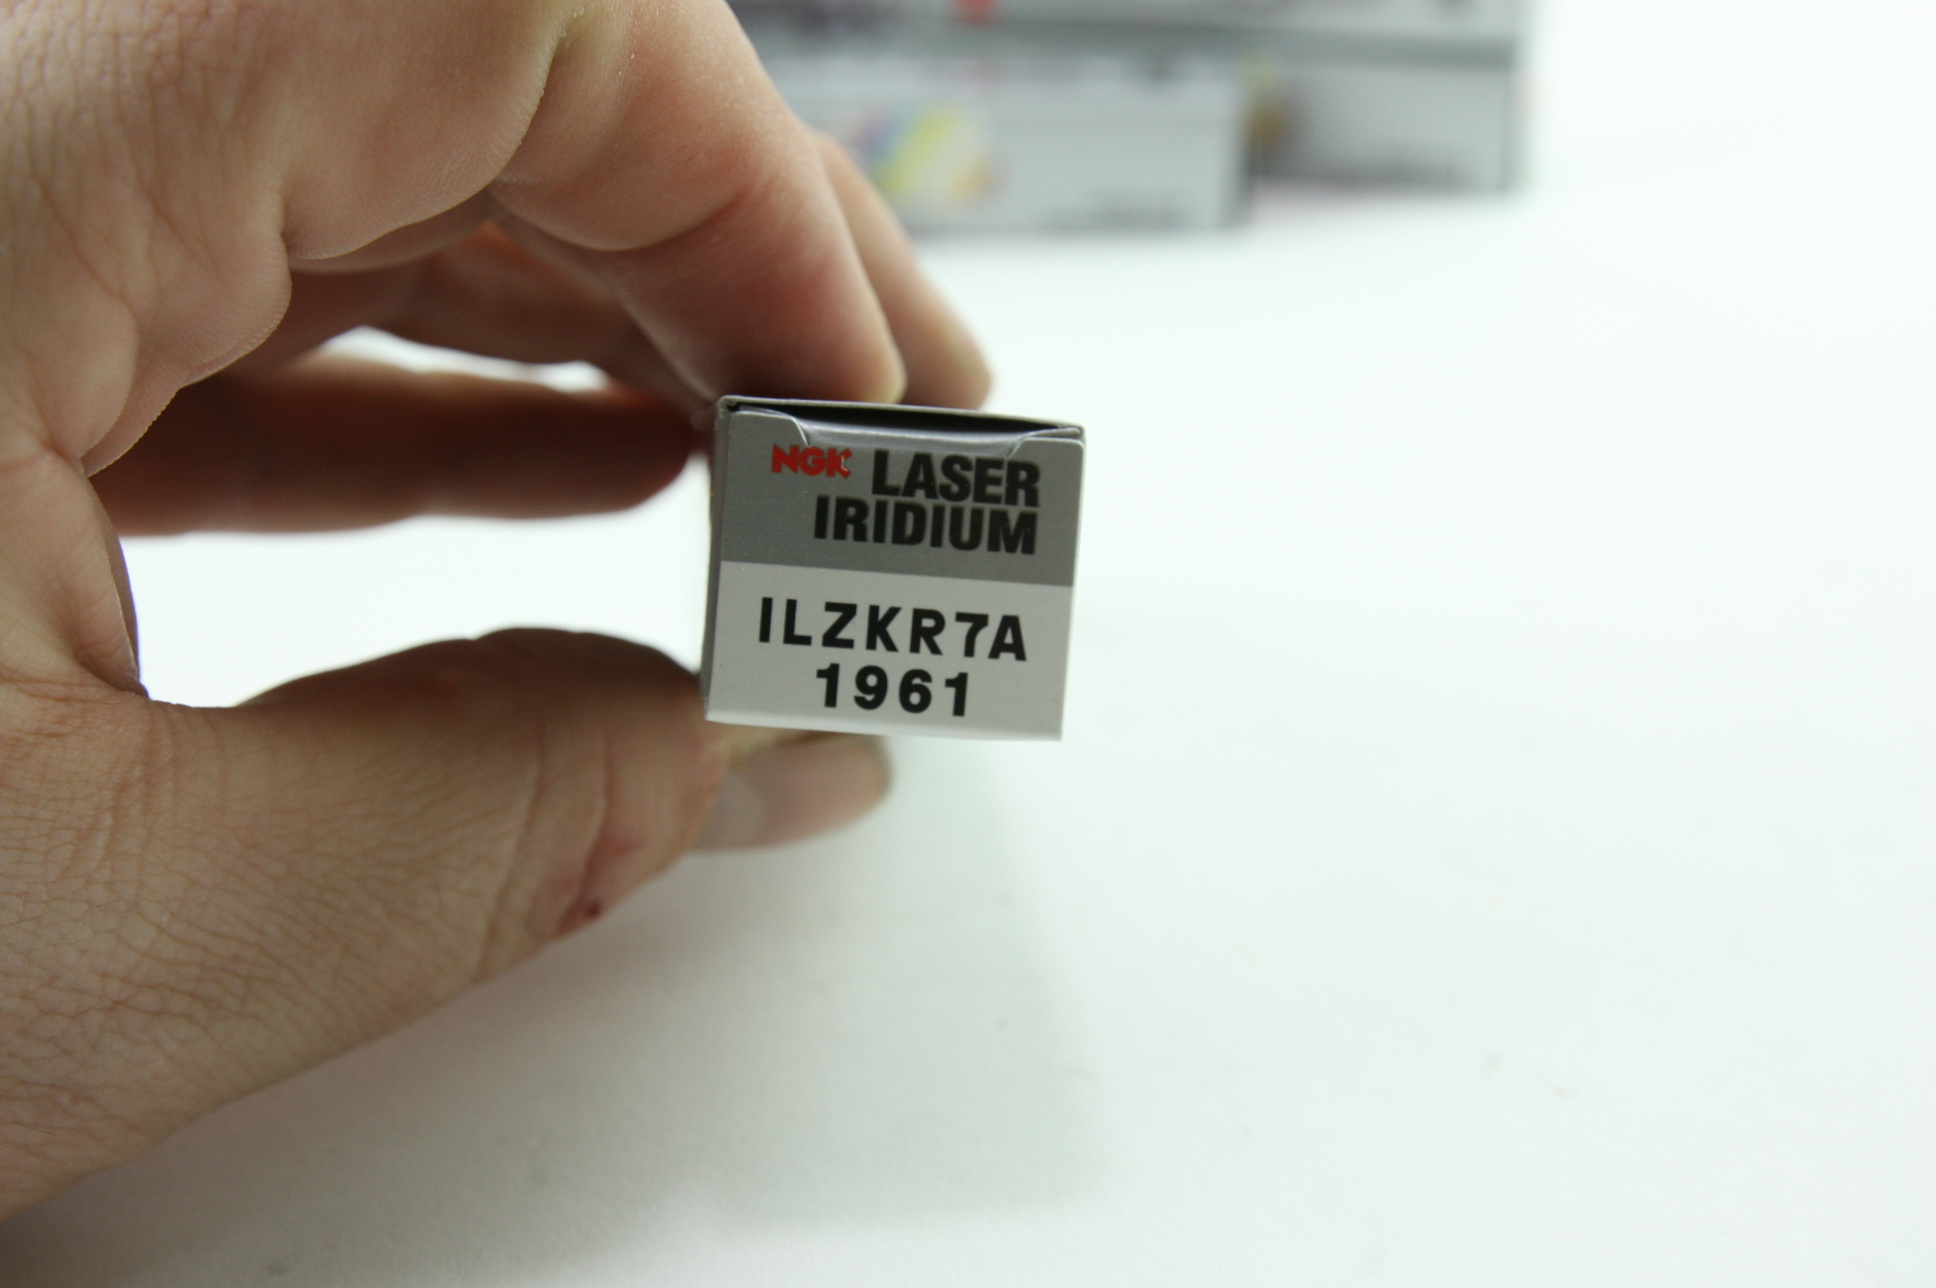 Set of 8 Genuine NGK 1961 Laser Iridium Spark Plugs ILZKR7A Fast Free Shipping - image 2